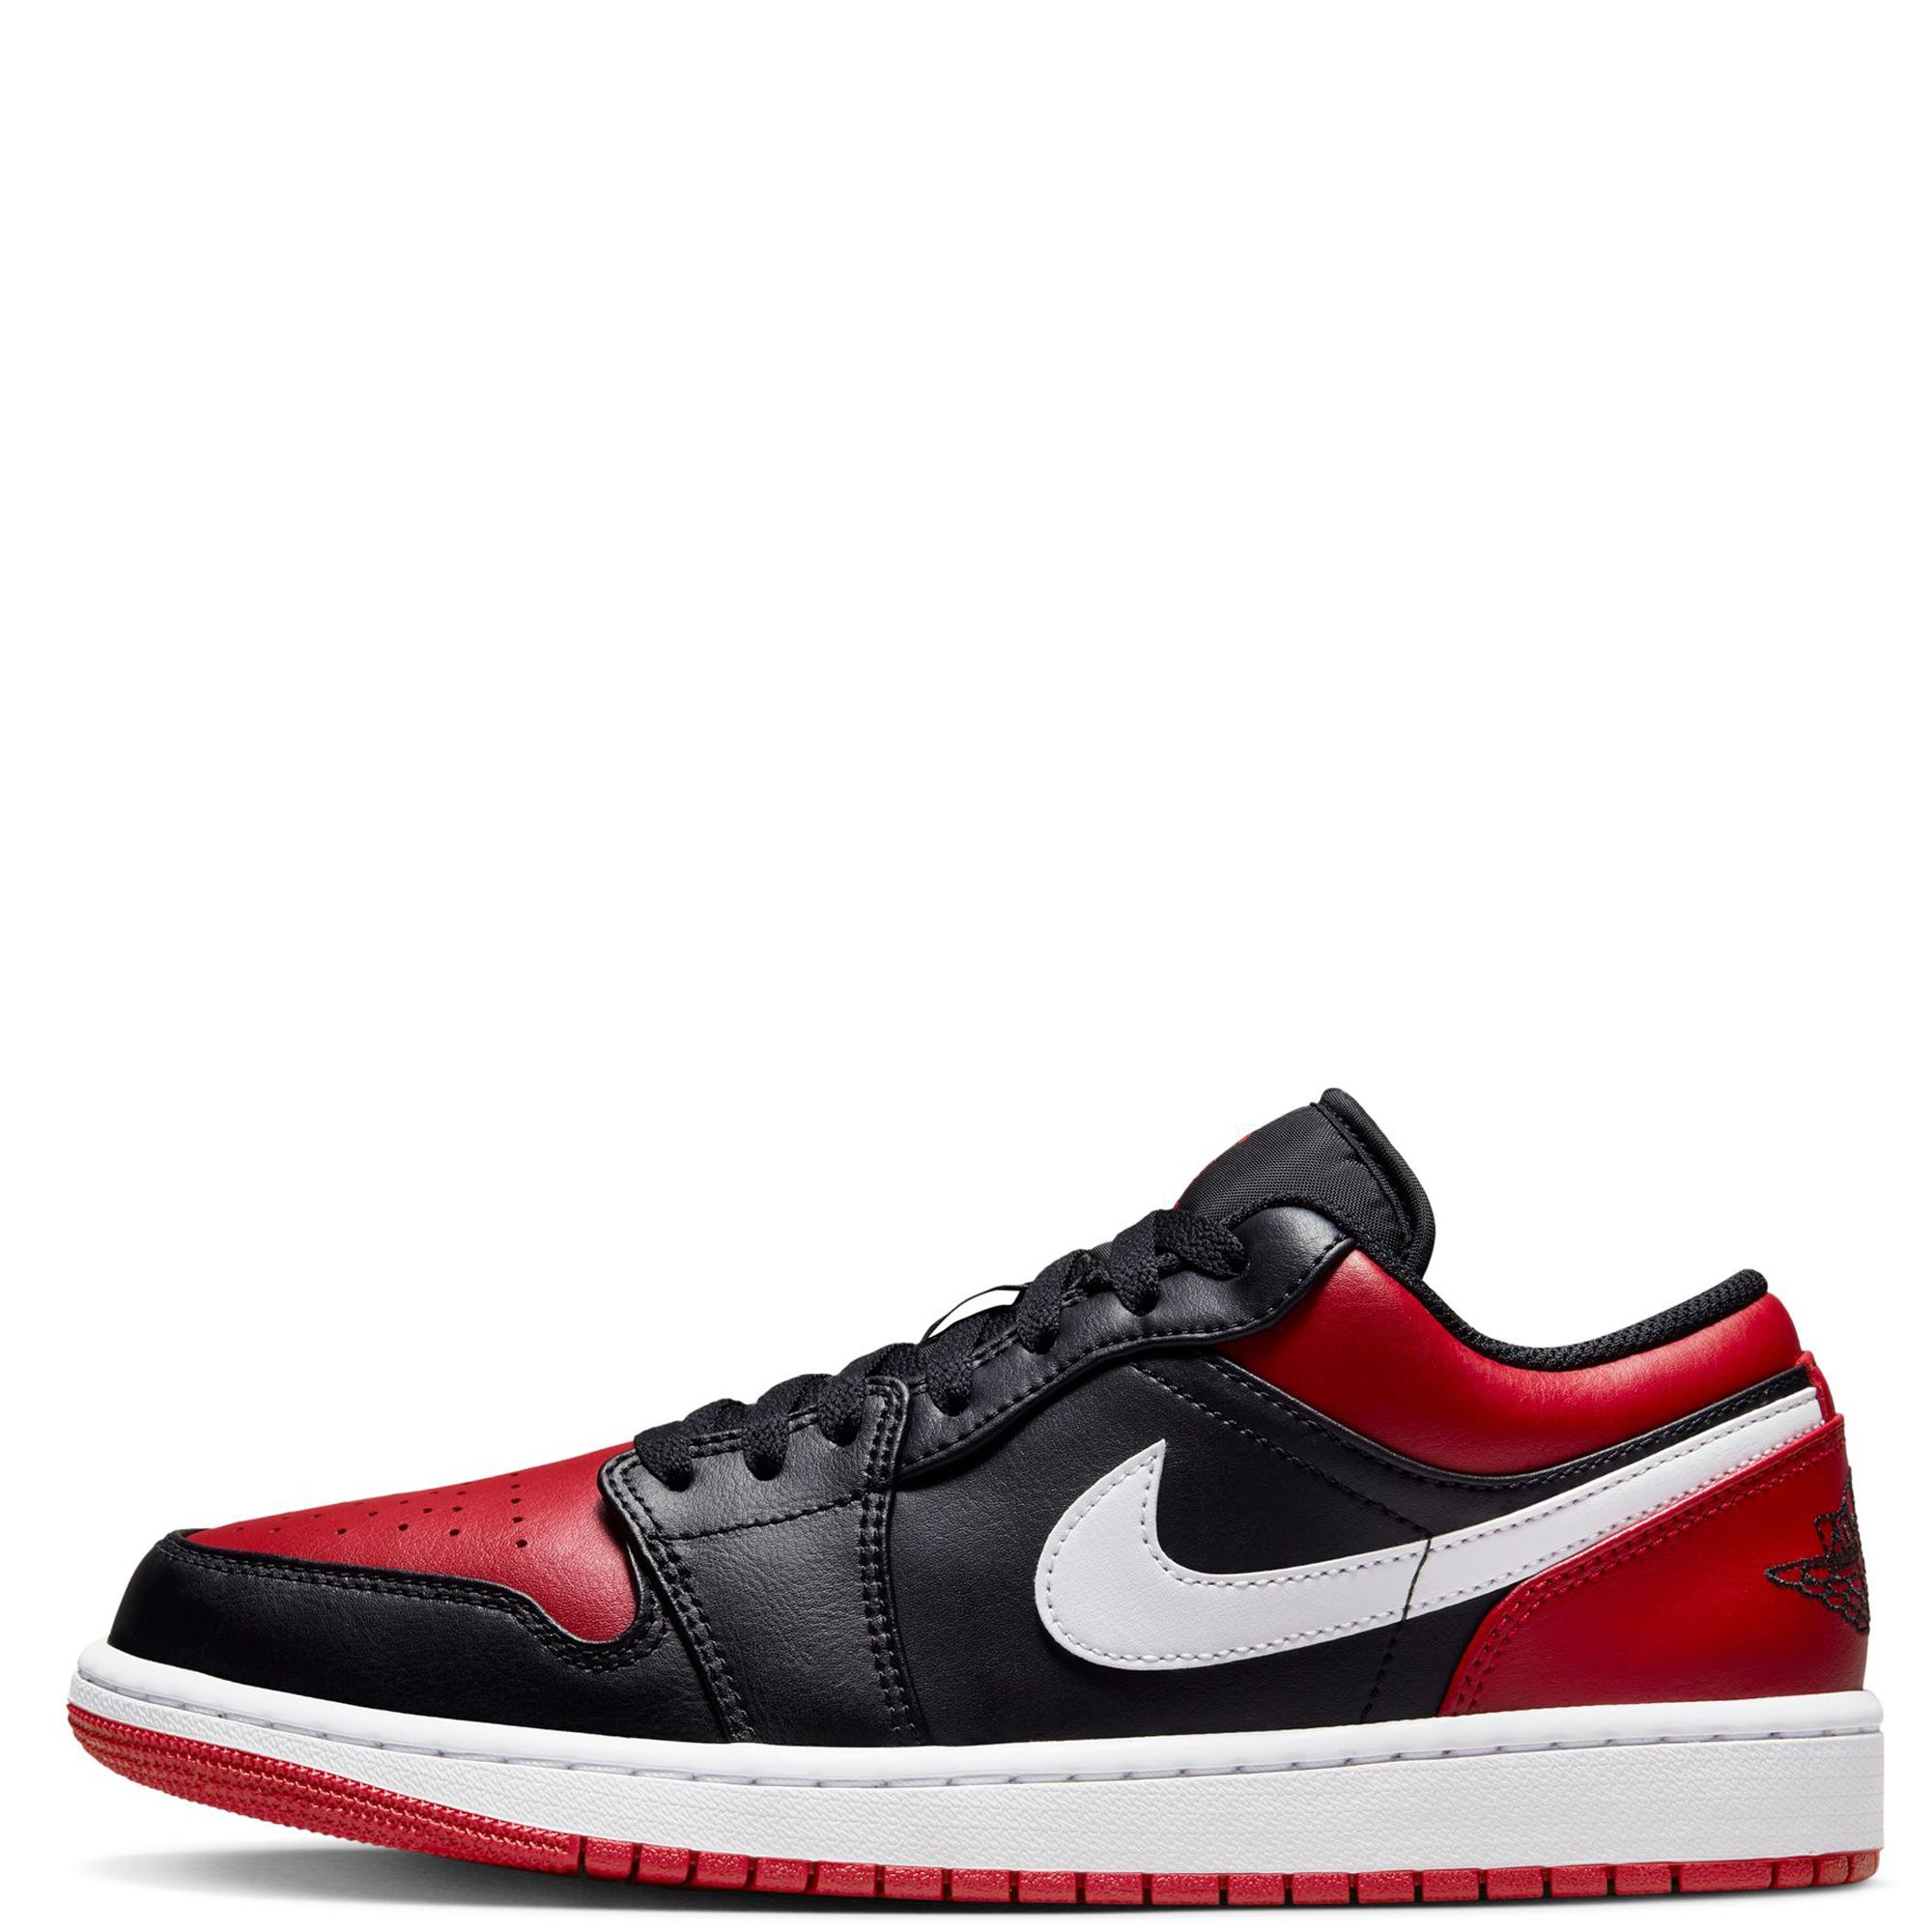 Air Jordan 1 low sneakers in black and gym red